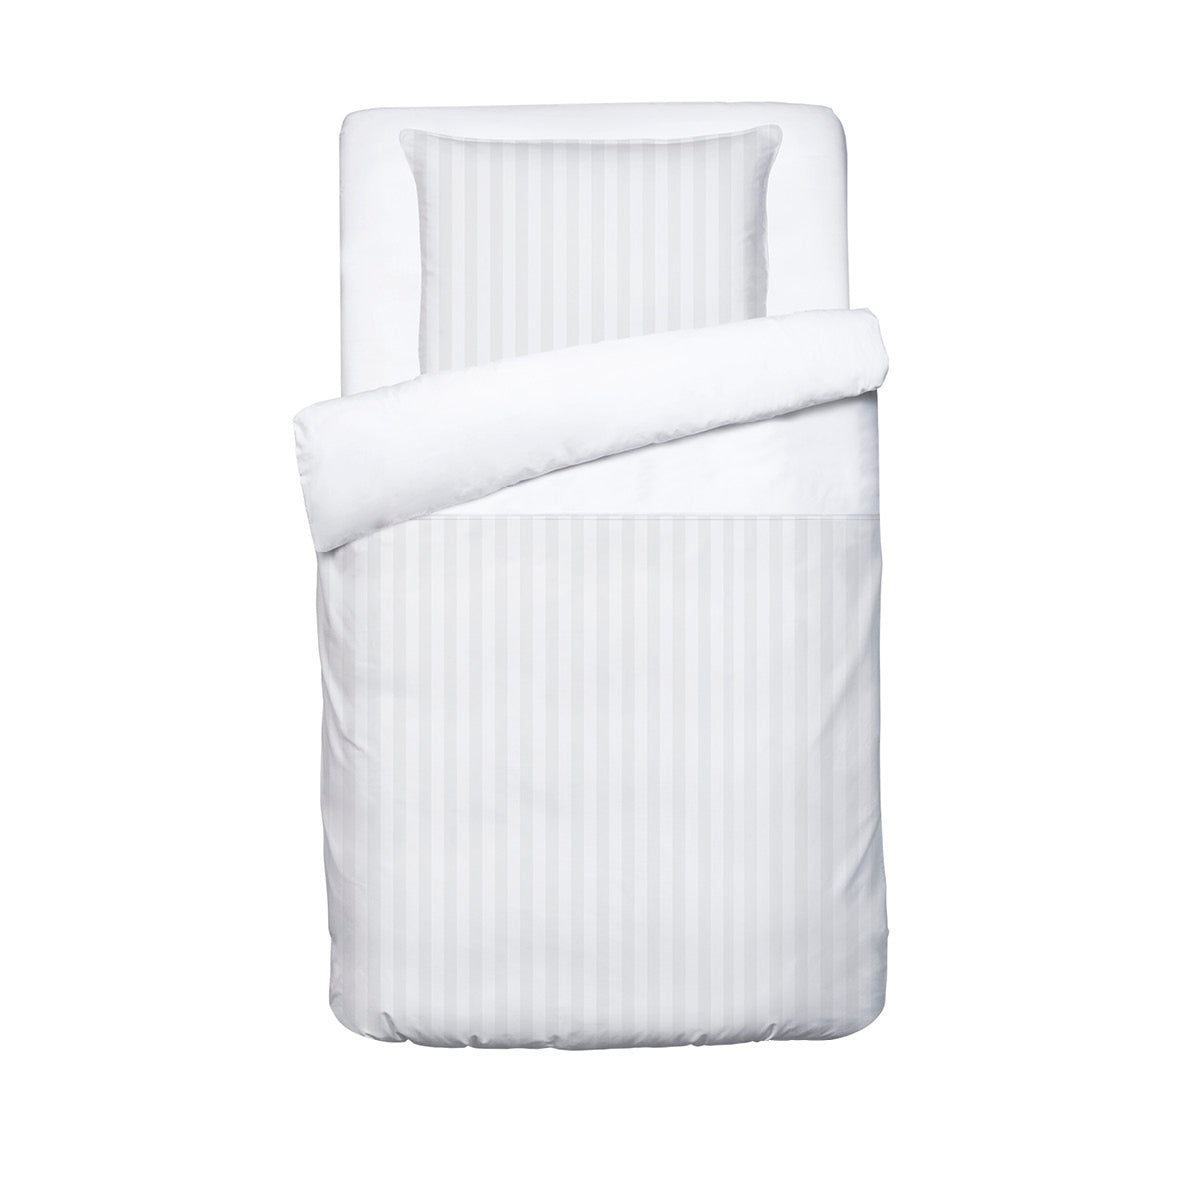 Bettbezug + Kopfkissenbezug Baby Baumwollsatin - Jacquard gewebt - gestreift Weiß